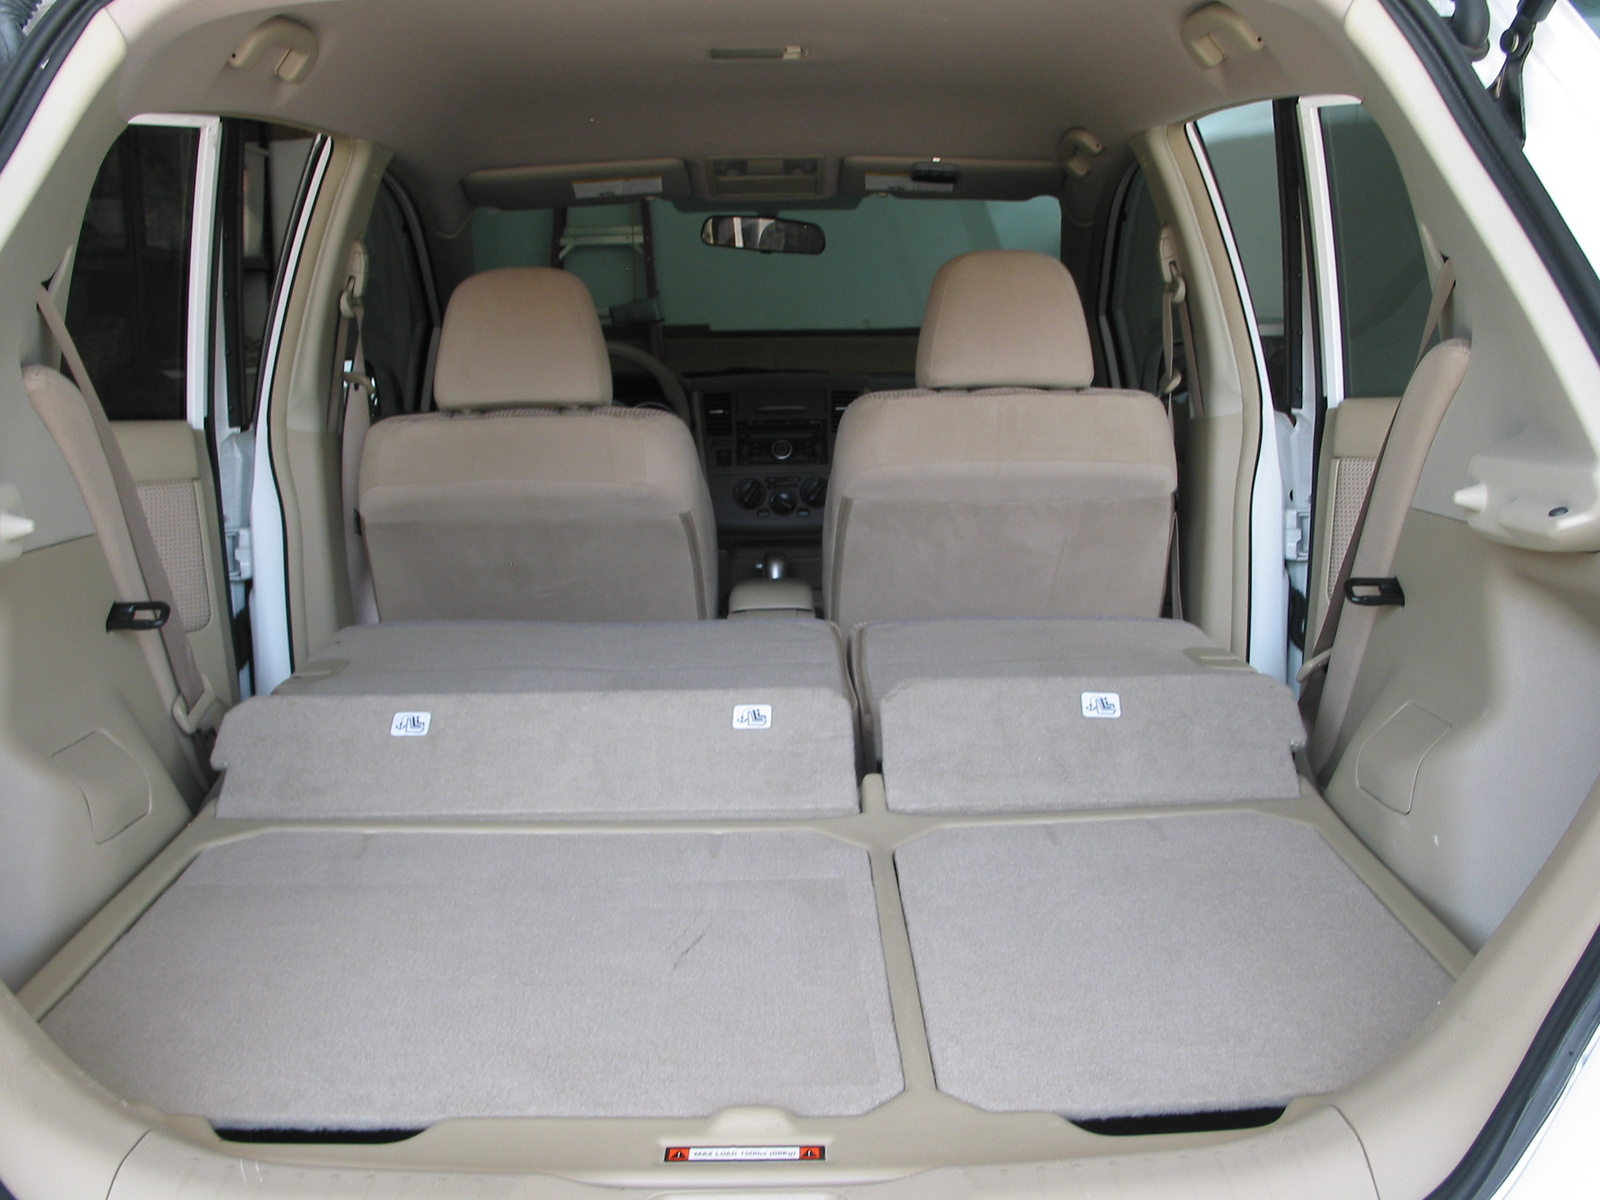 2010 Nissan versa interior dimensions